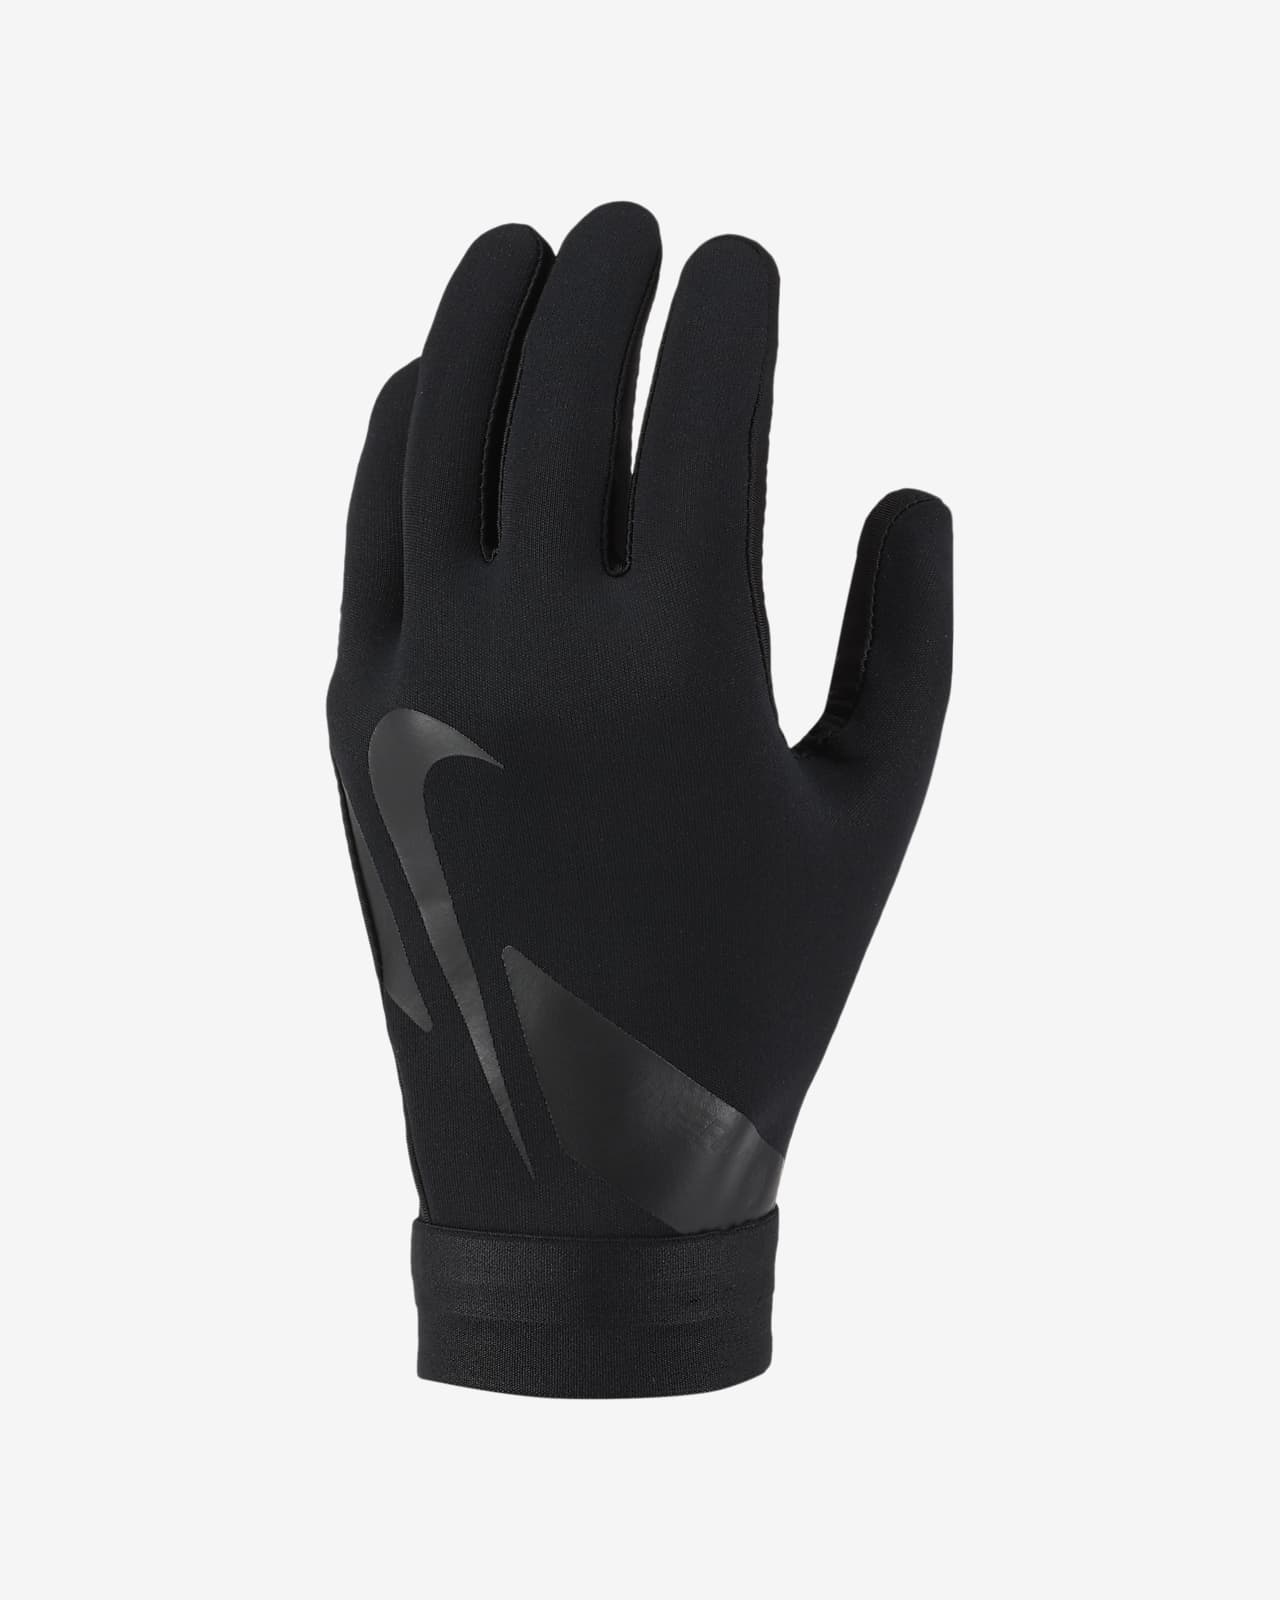 nfl stadium gloves